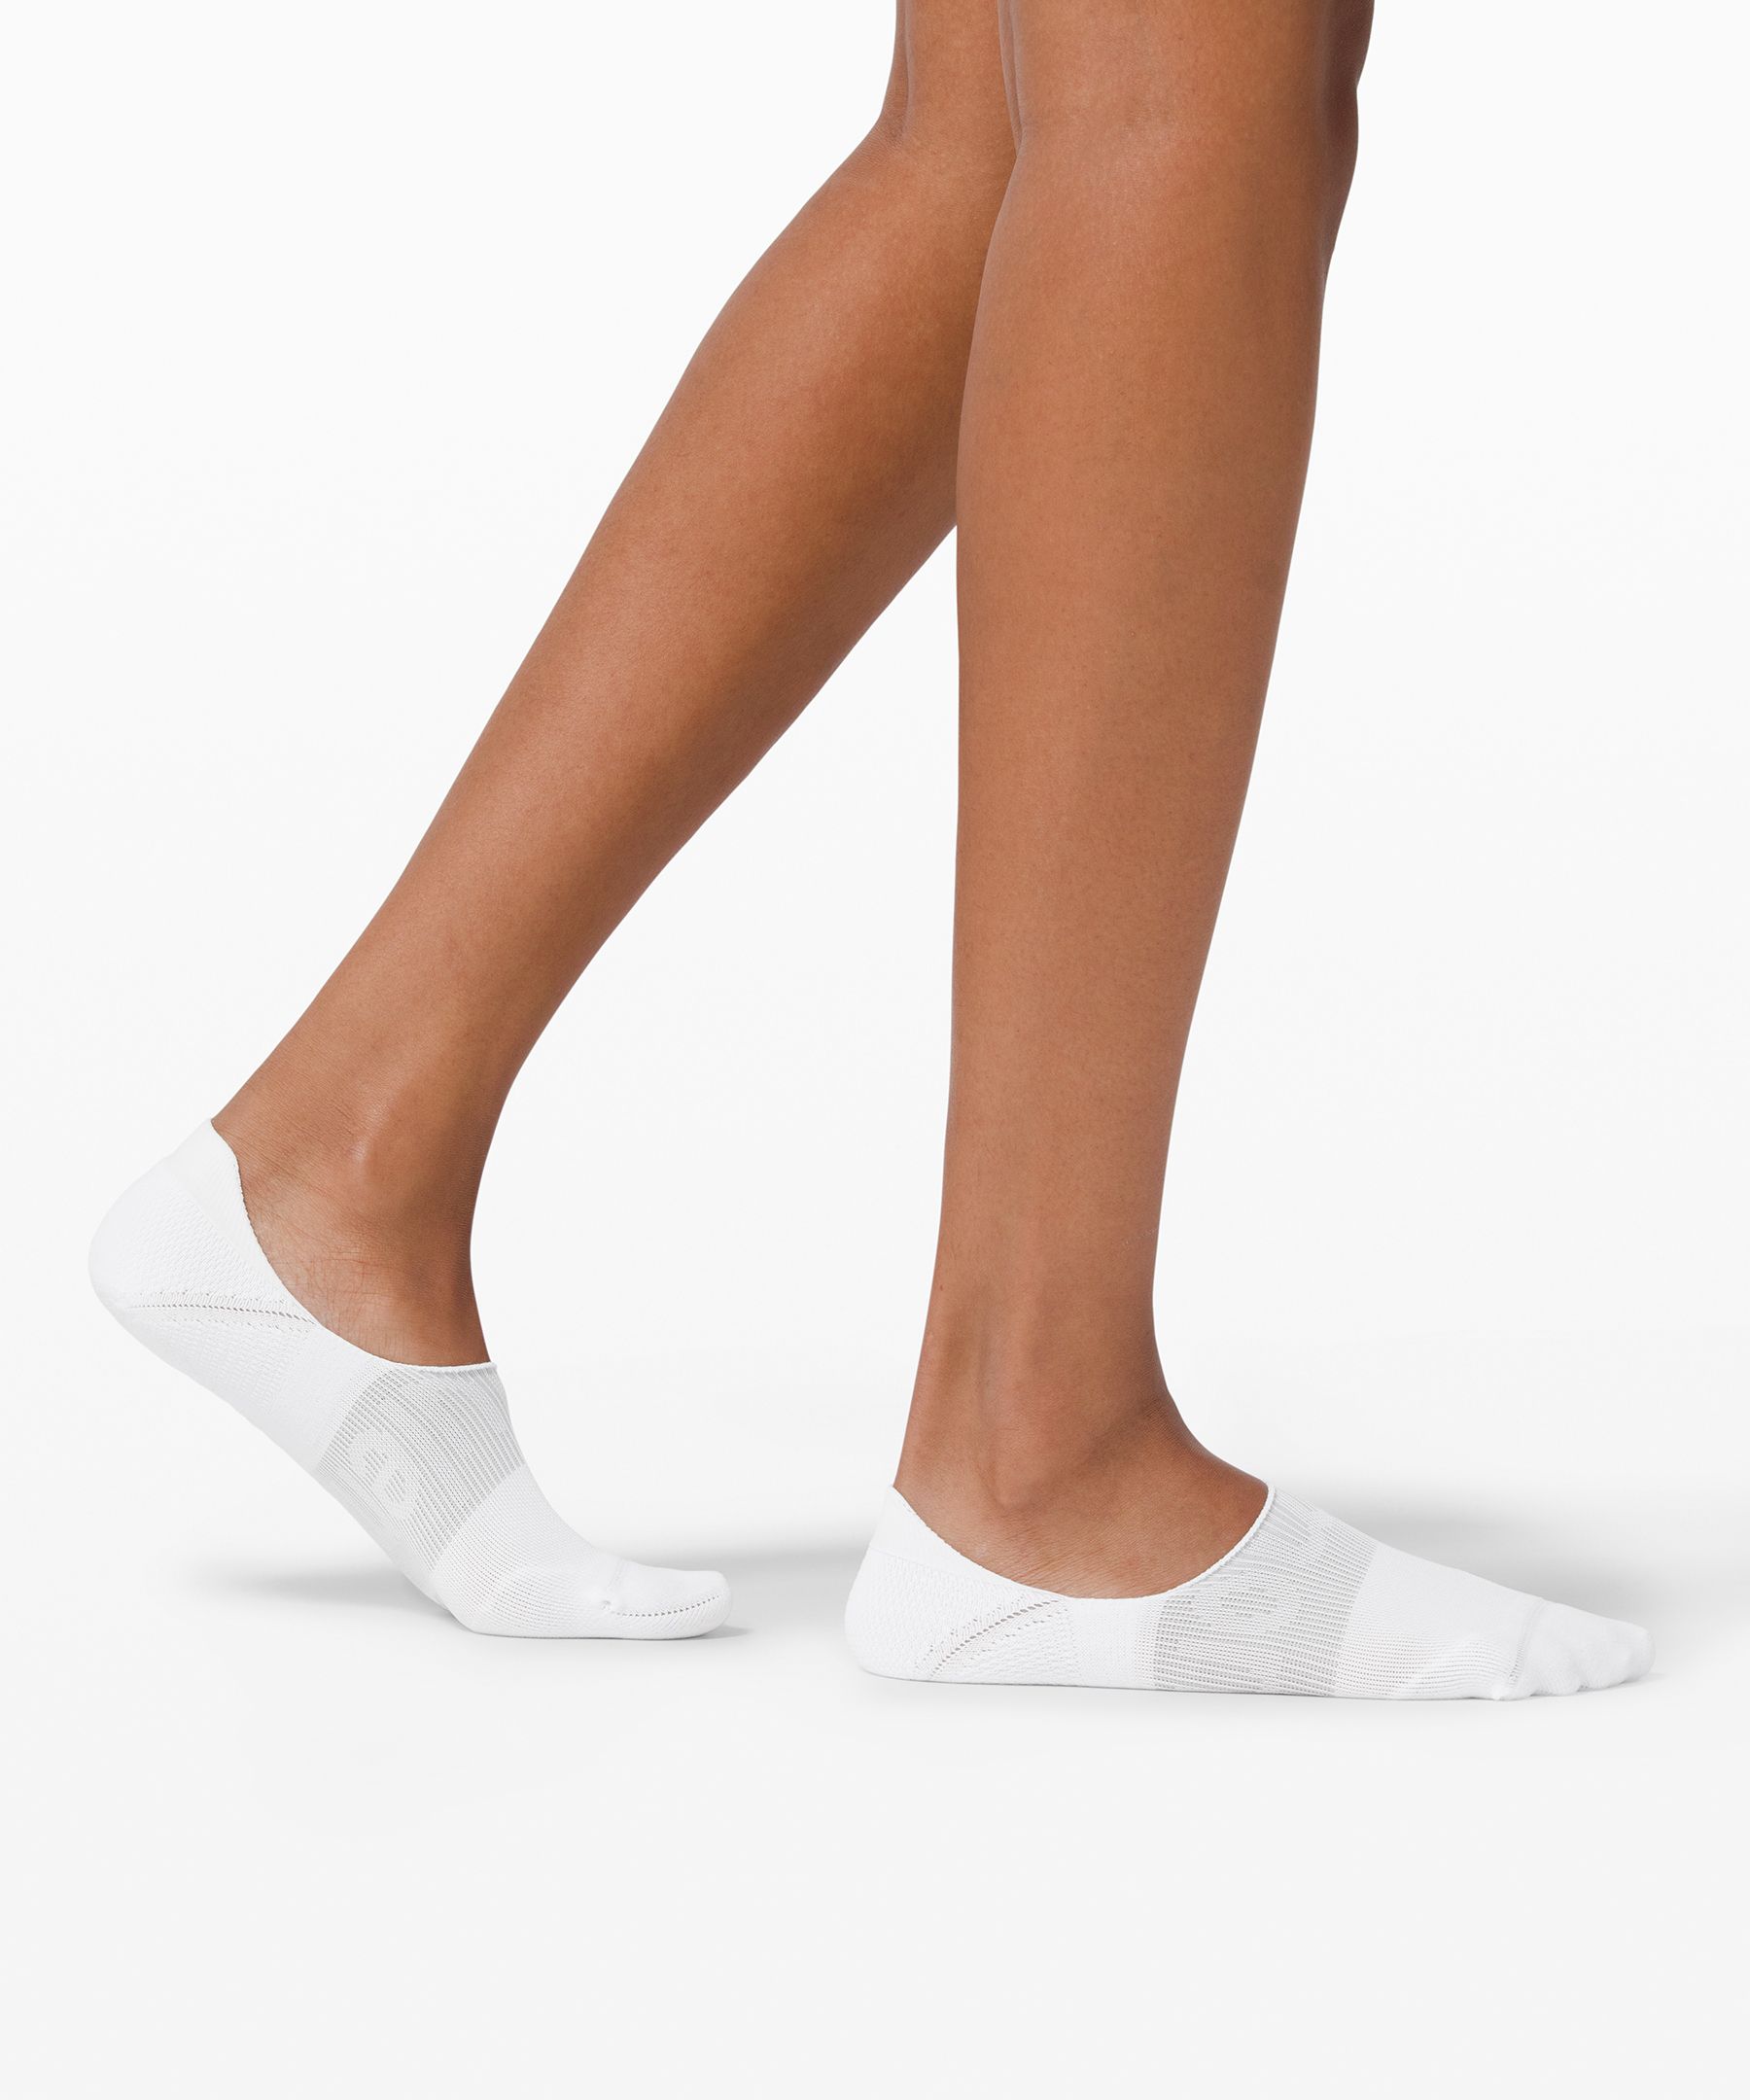 lululemon compression socks